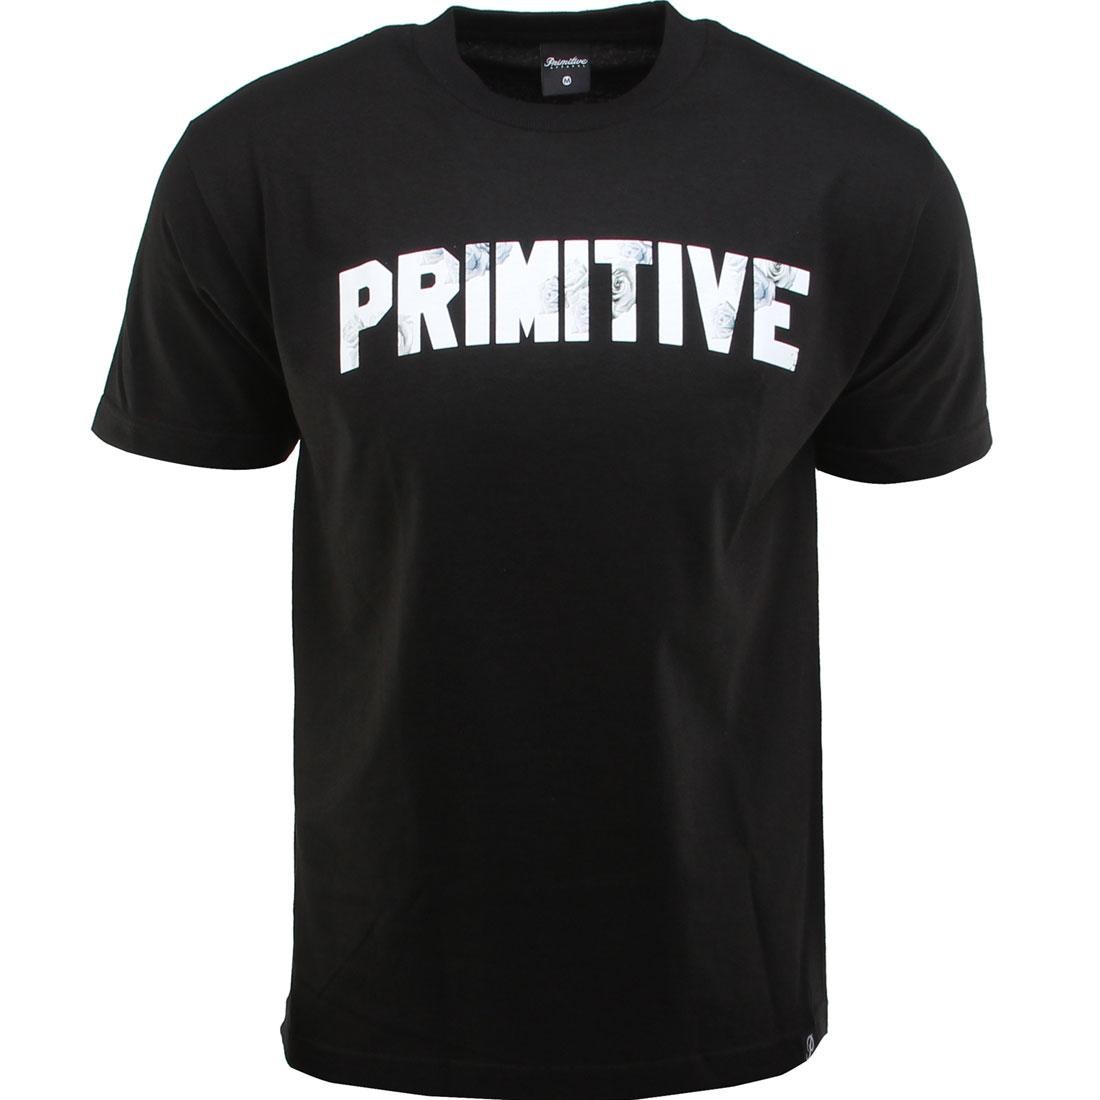 Primitive Honor Tee (black)